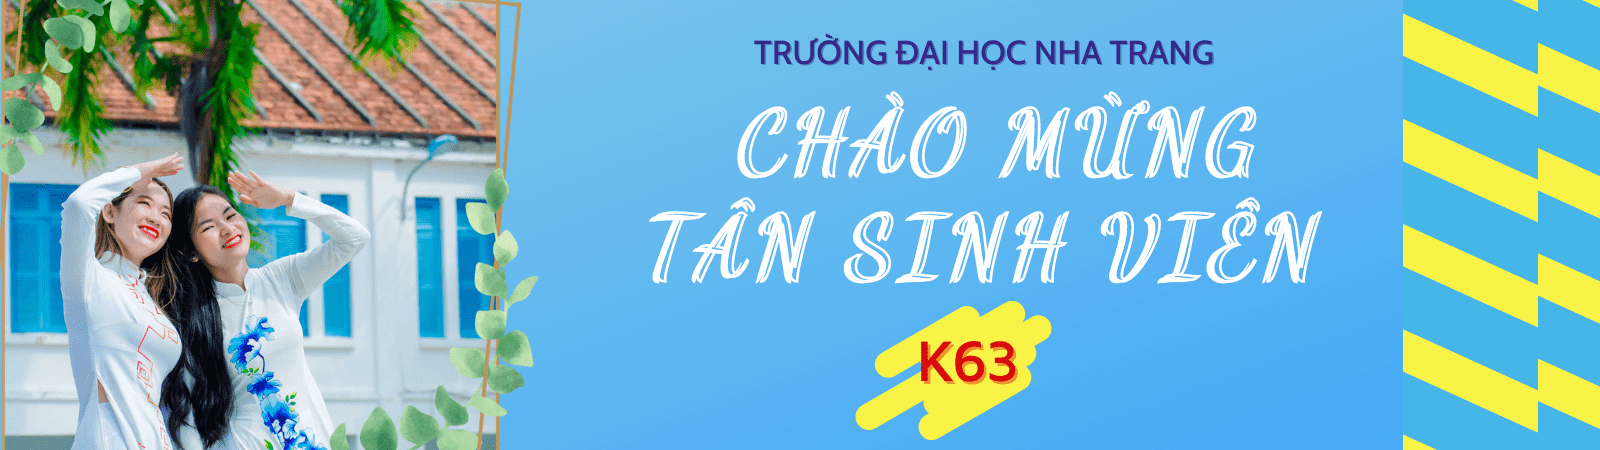 chao-mung-tan-sv-khoa-60.png